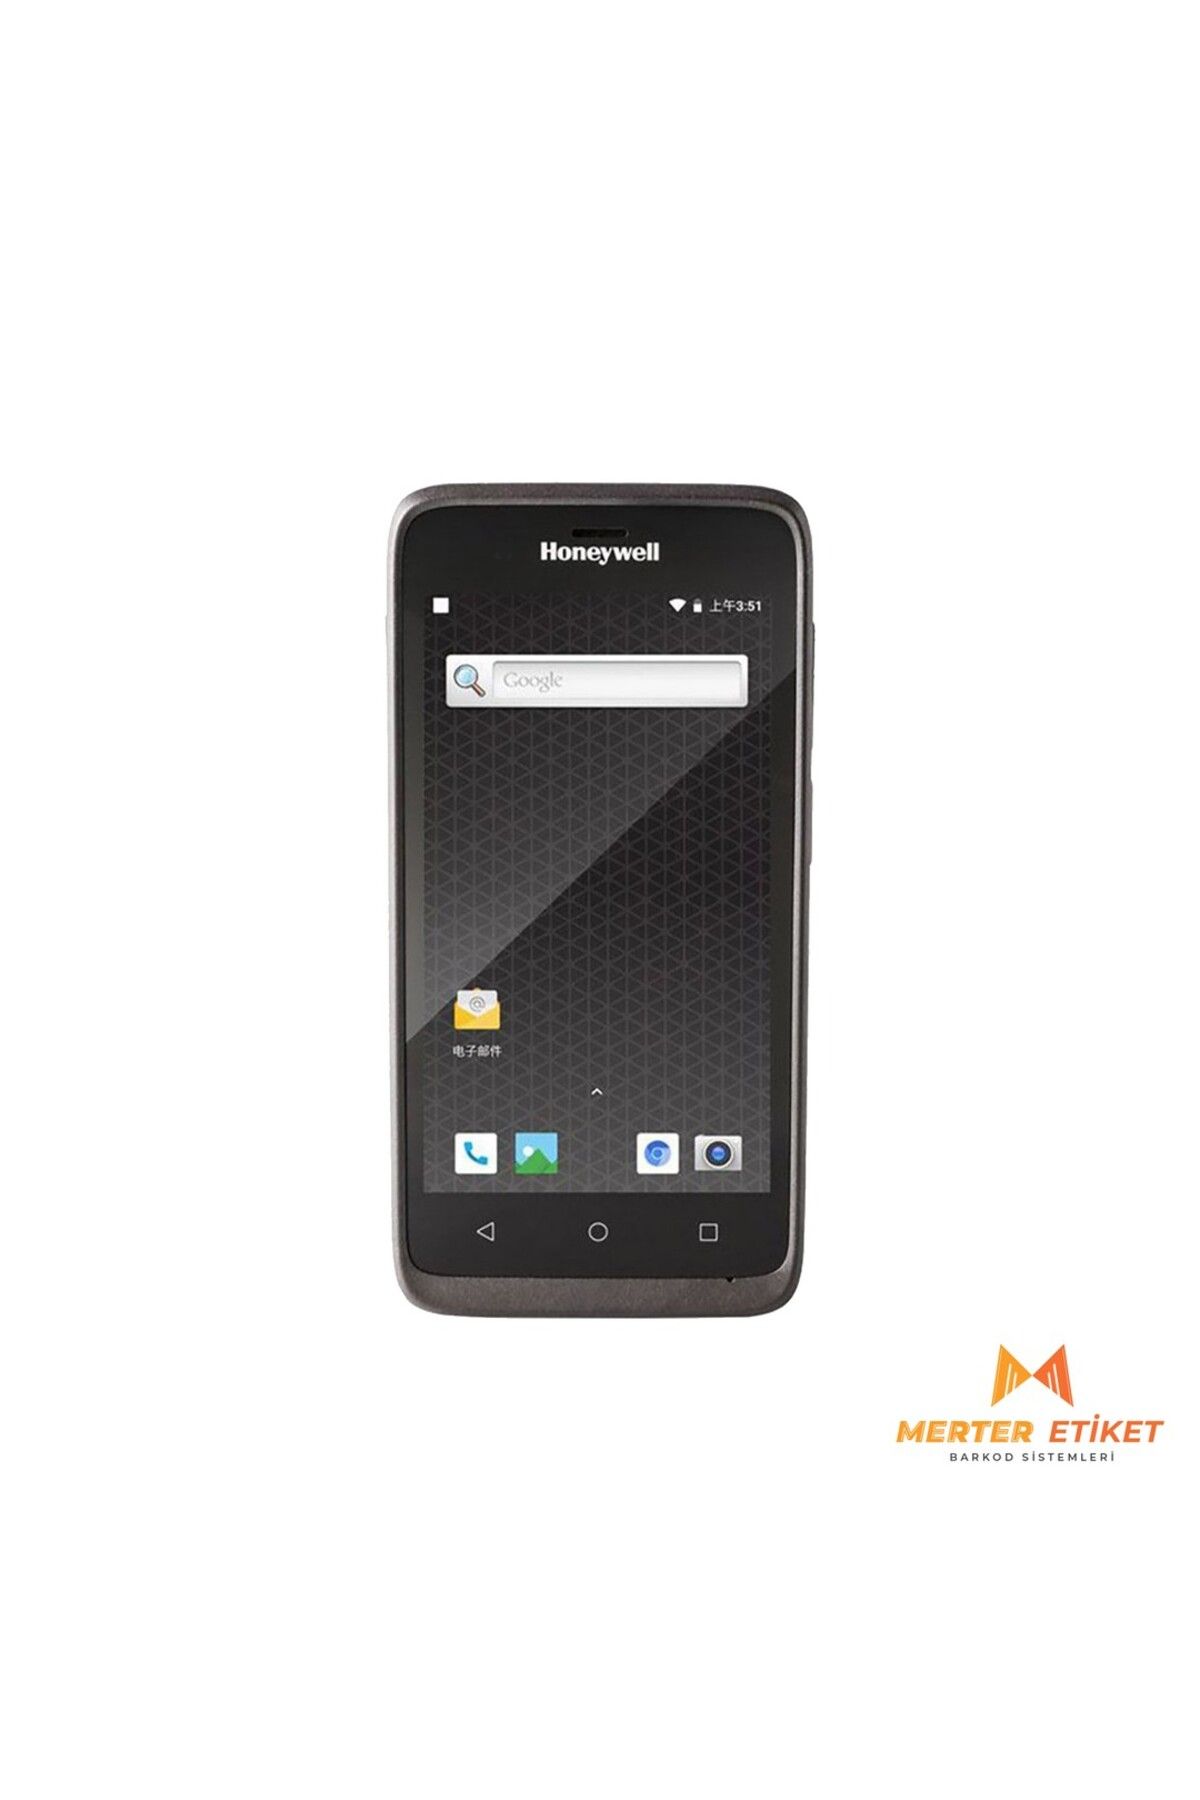 merter etiket Honeywell Eda51 Android El Terminali